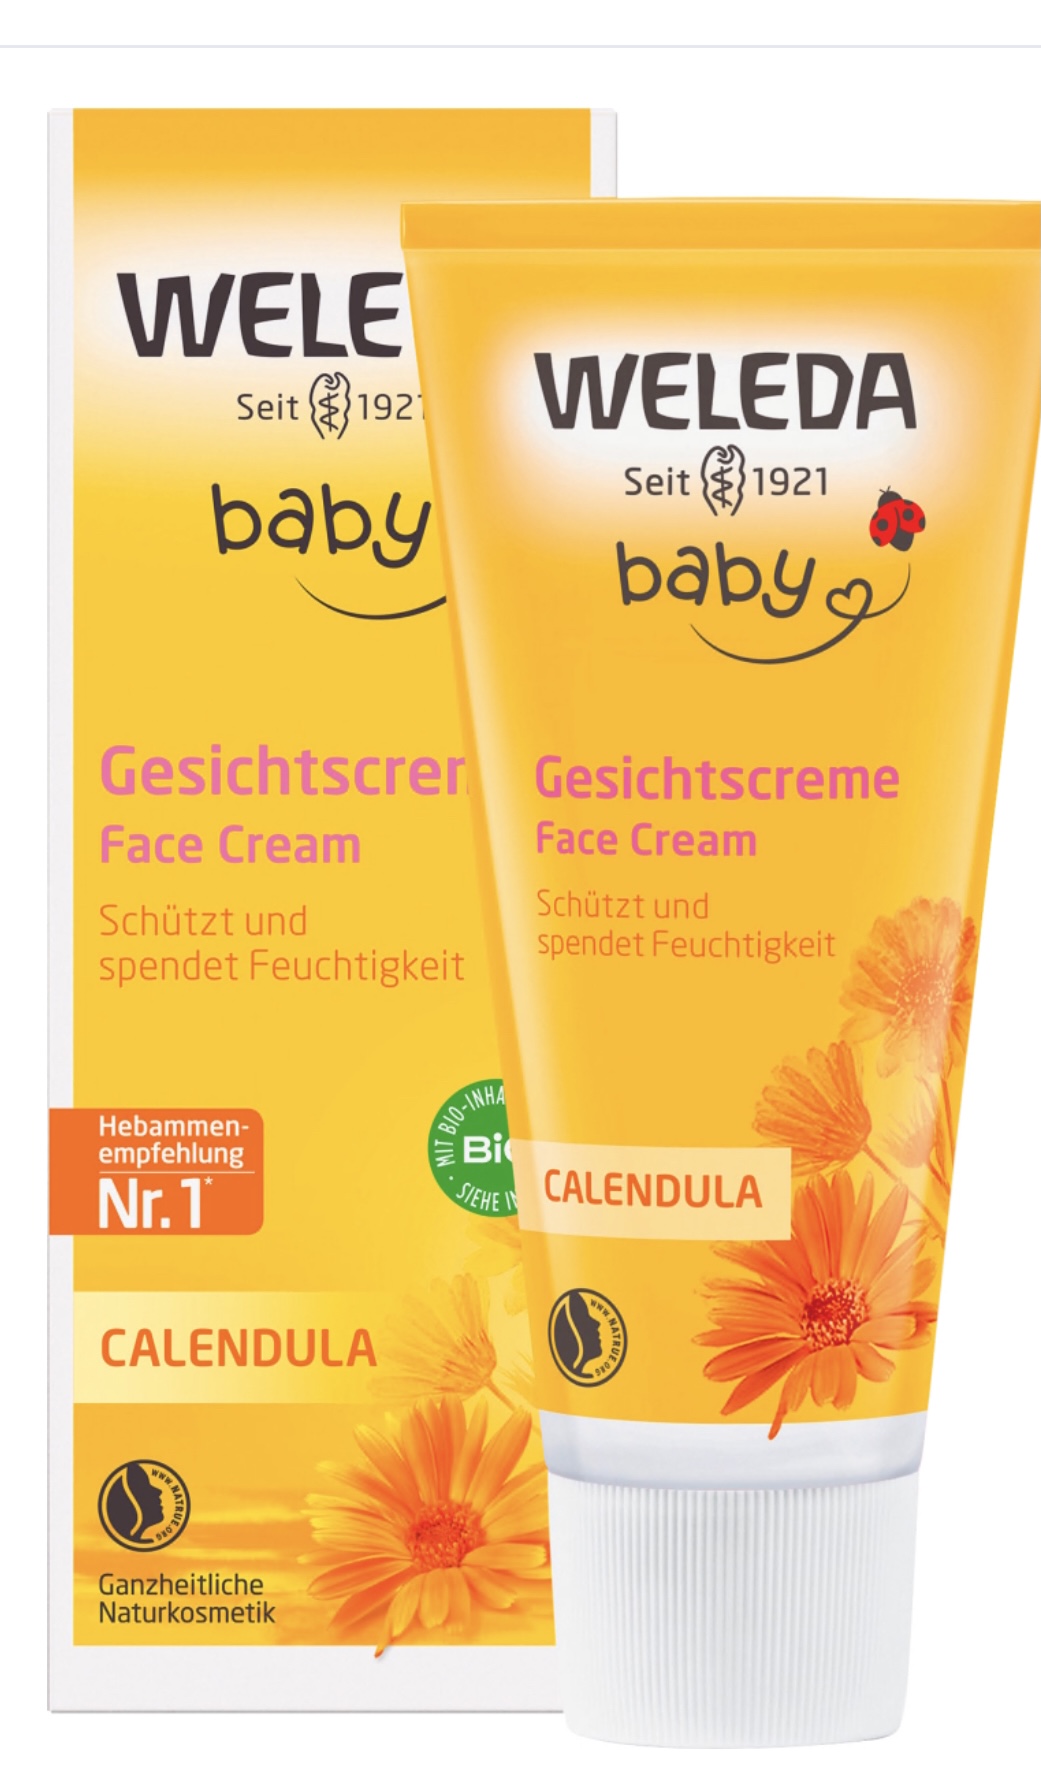 Bill Đức Kem dưỡng da mặt Face Cream Weleda Calendula cho bé, 50ml